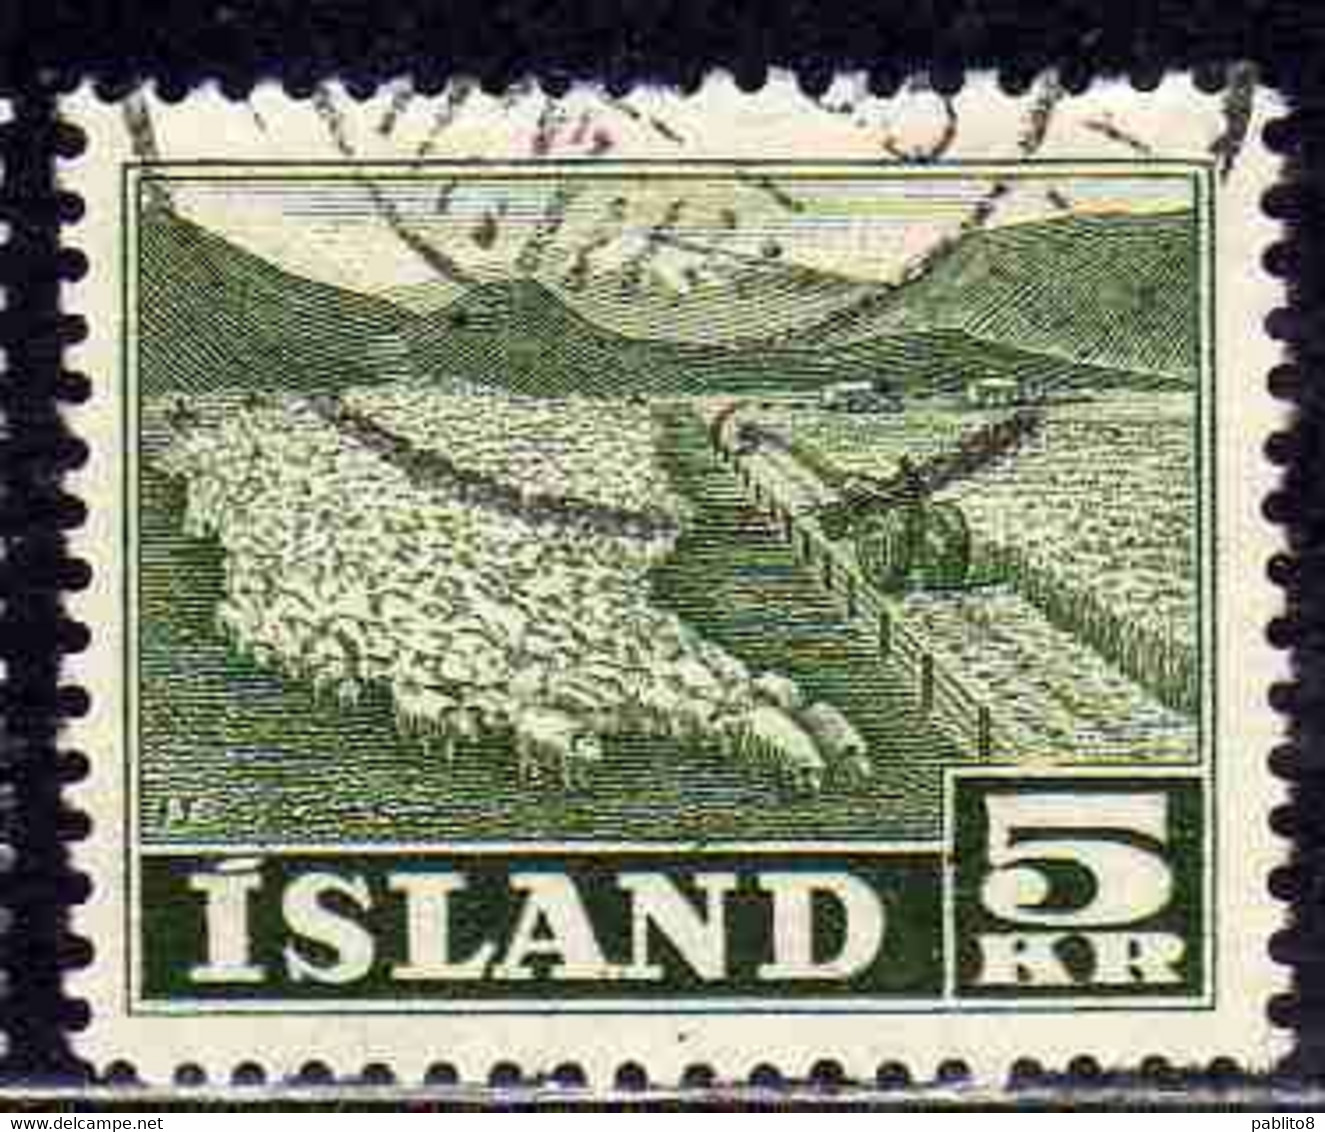 ISLANDA ICELAND ISLANDE 1950 1954 FLOCK OF SHEEP 5k USED USATO OBLITERE' - Usados